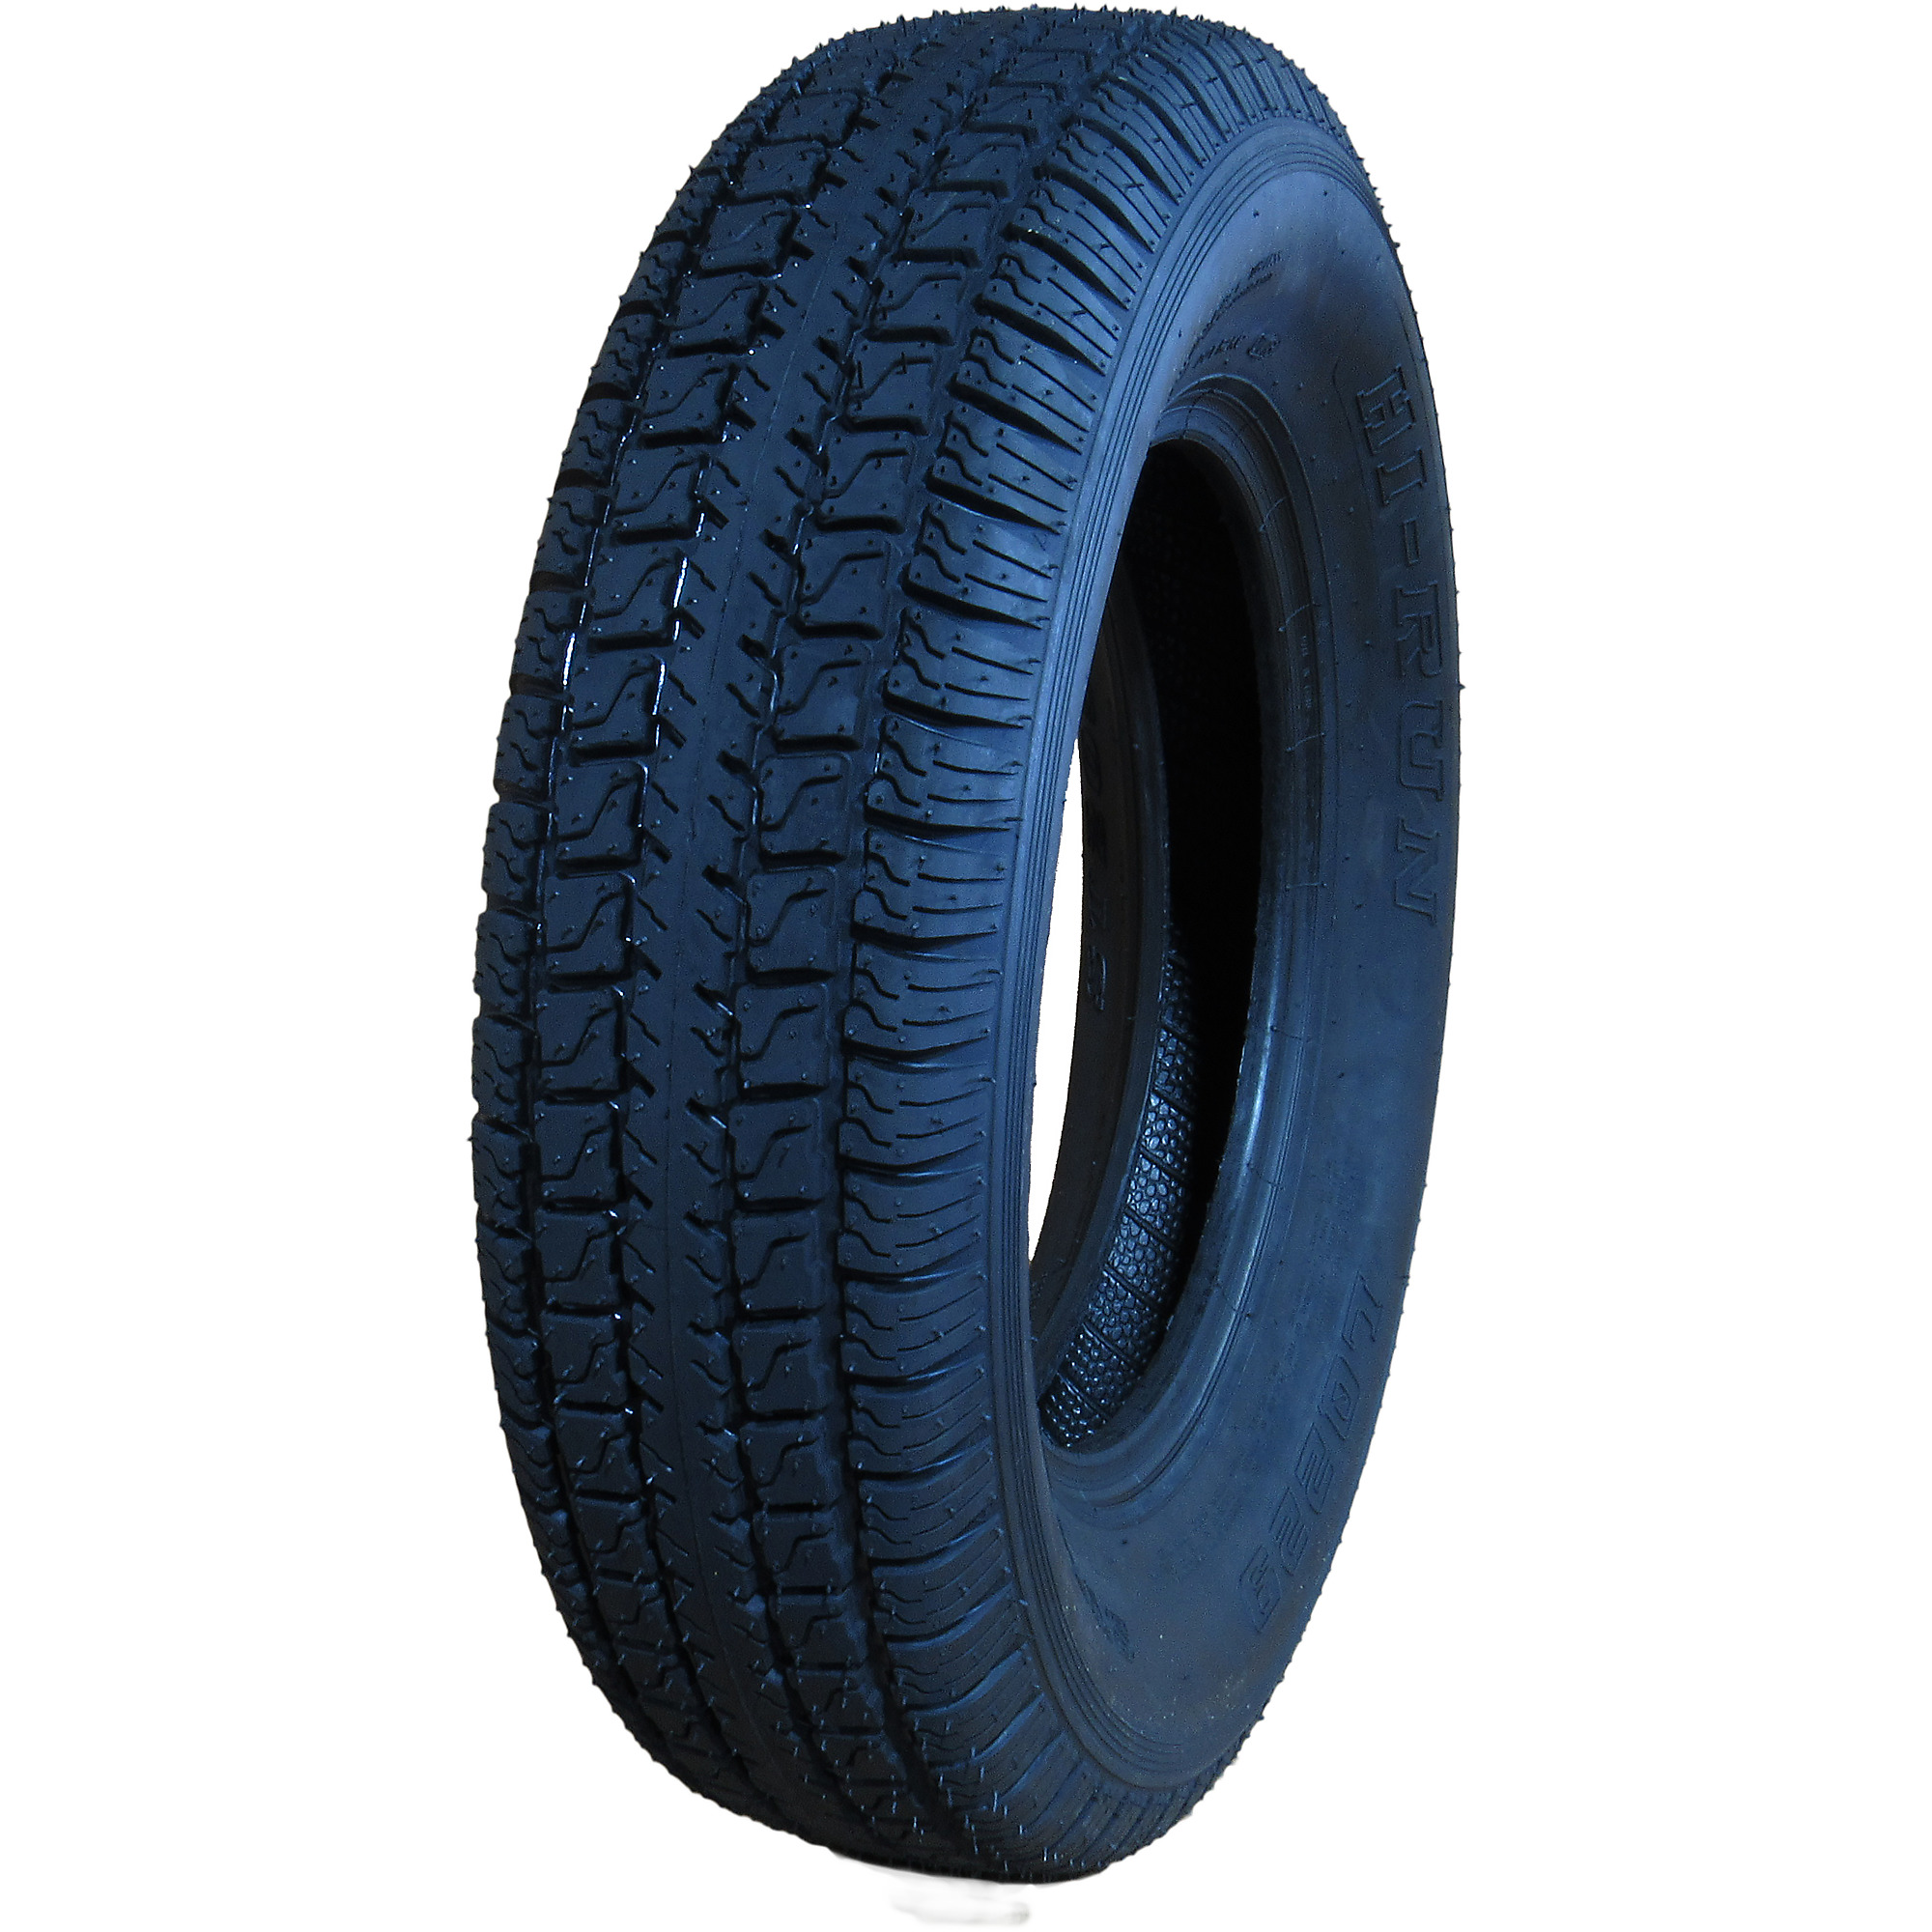 HI-RUN, Highway Trailer Tire, Bias-ply, Tire Size ST205/75D15 Load Range Rating C, Model LZ1006